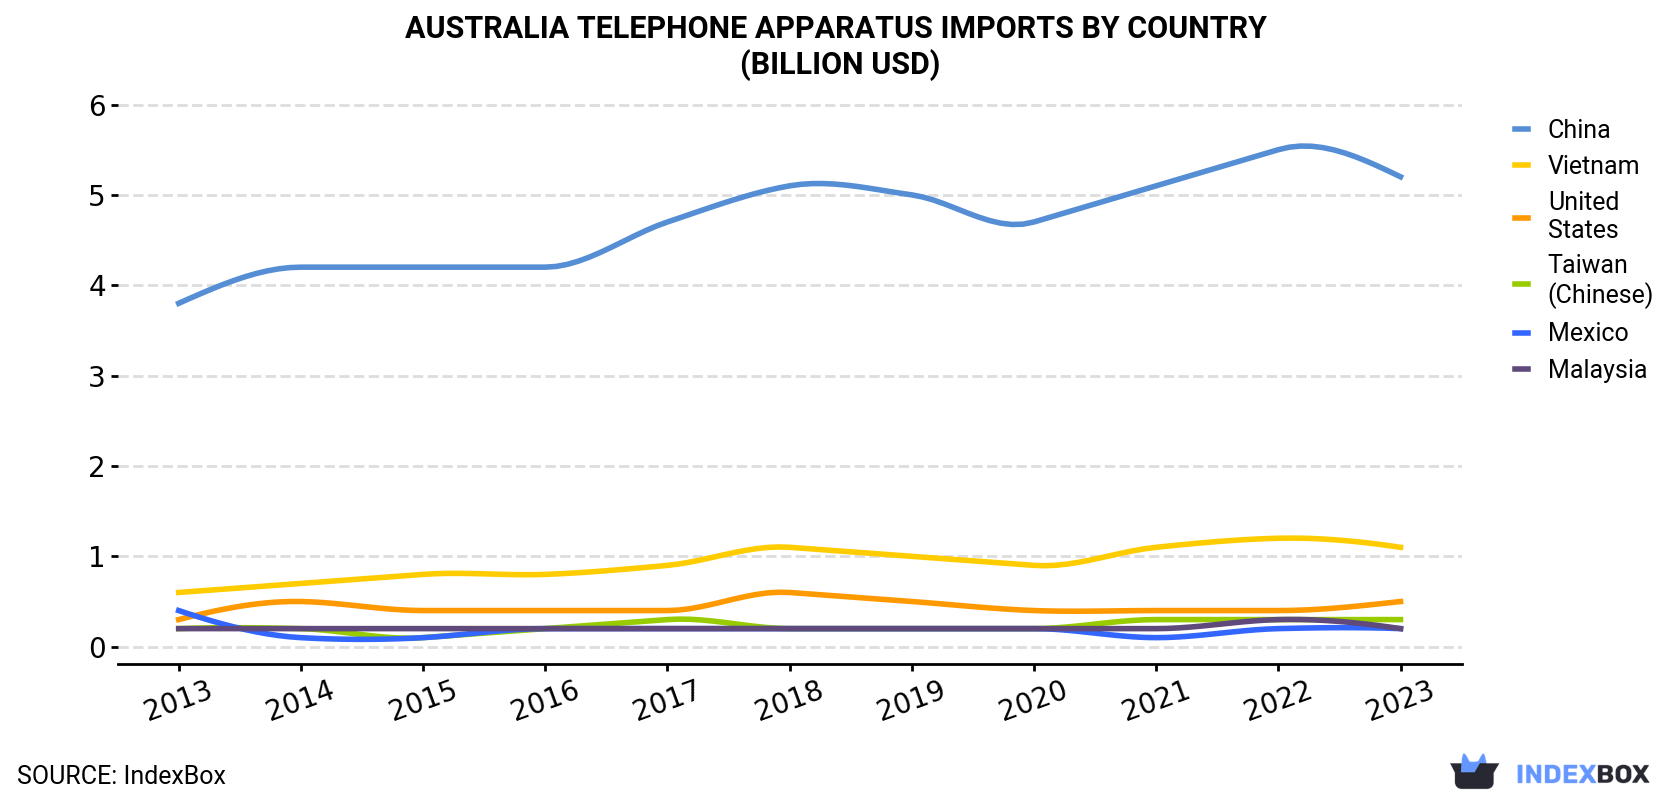 Australia Telephone Apparatus Imports By Country (Billion USD)